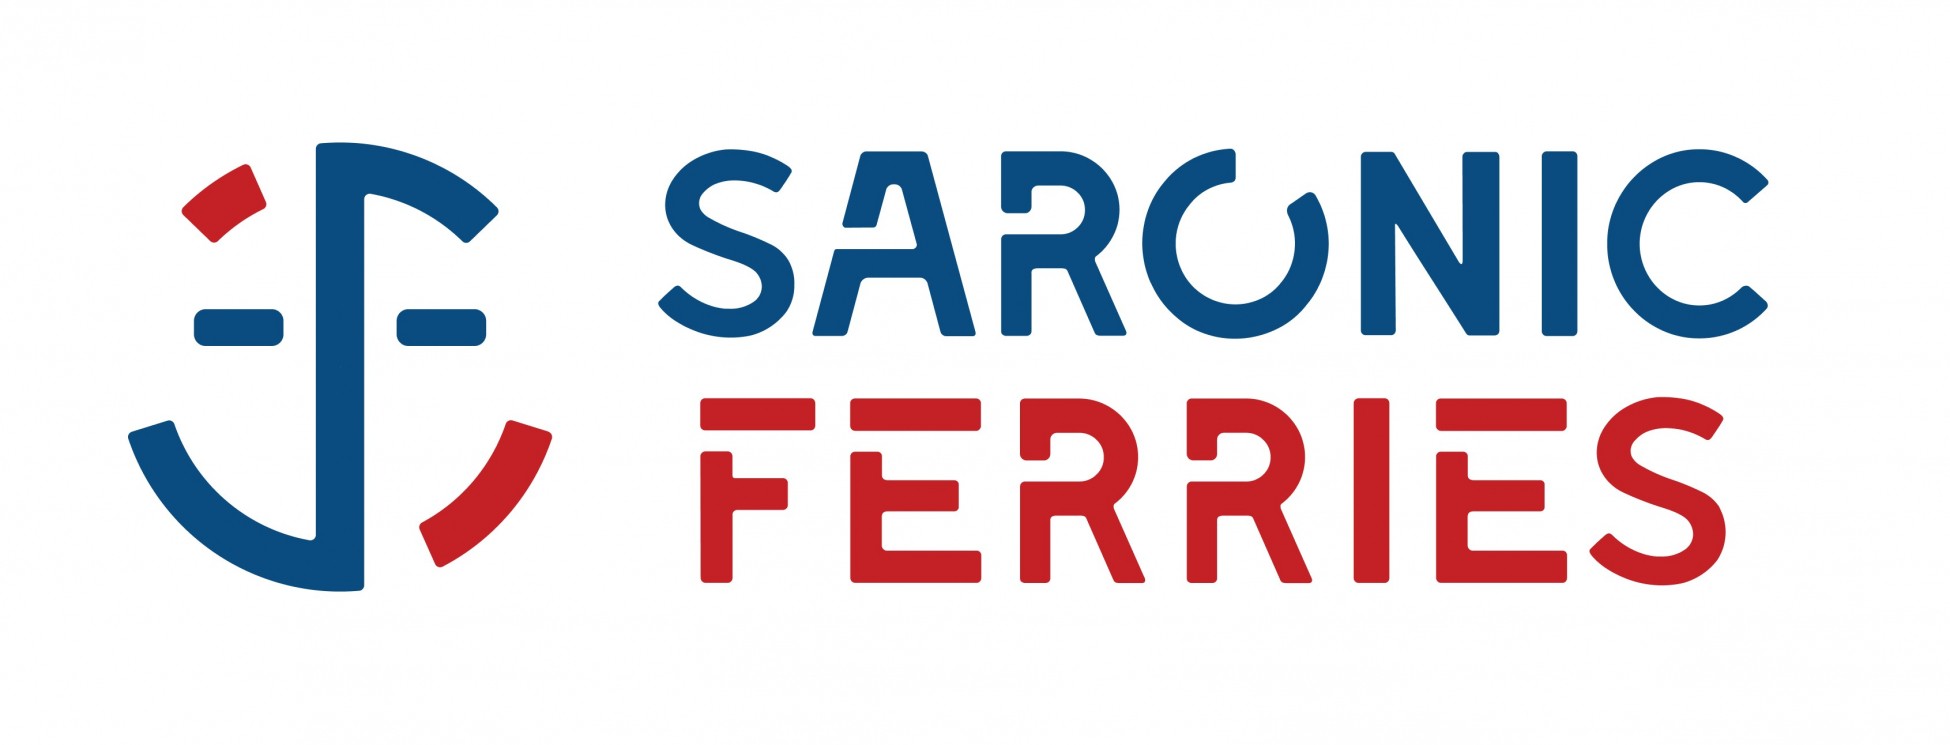 saronic-ferries-logo.jpg